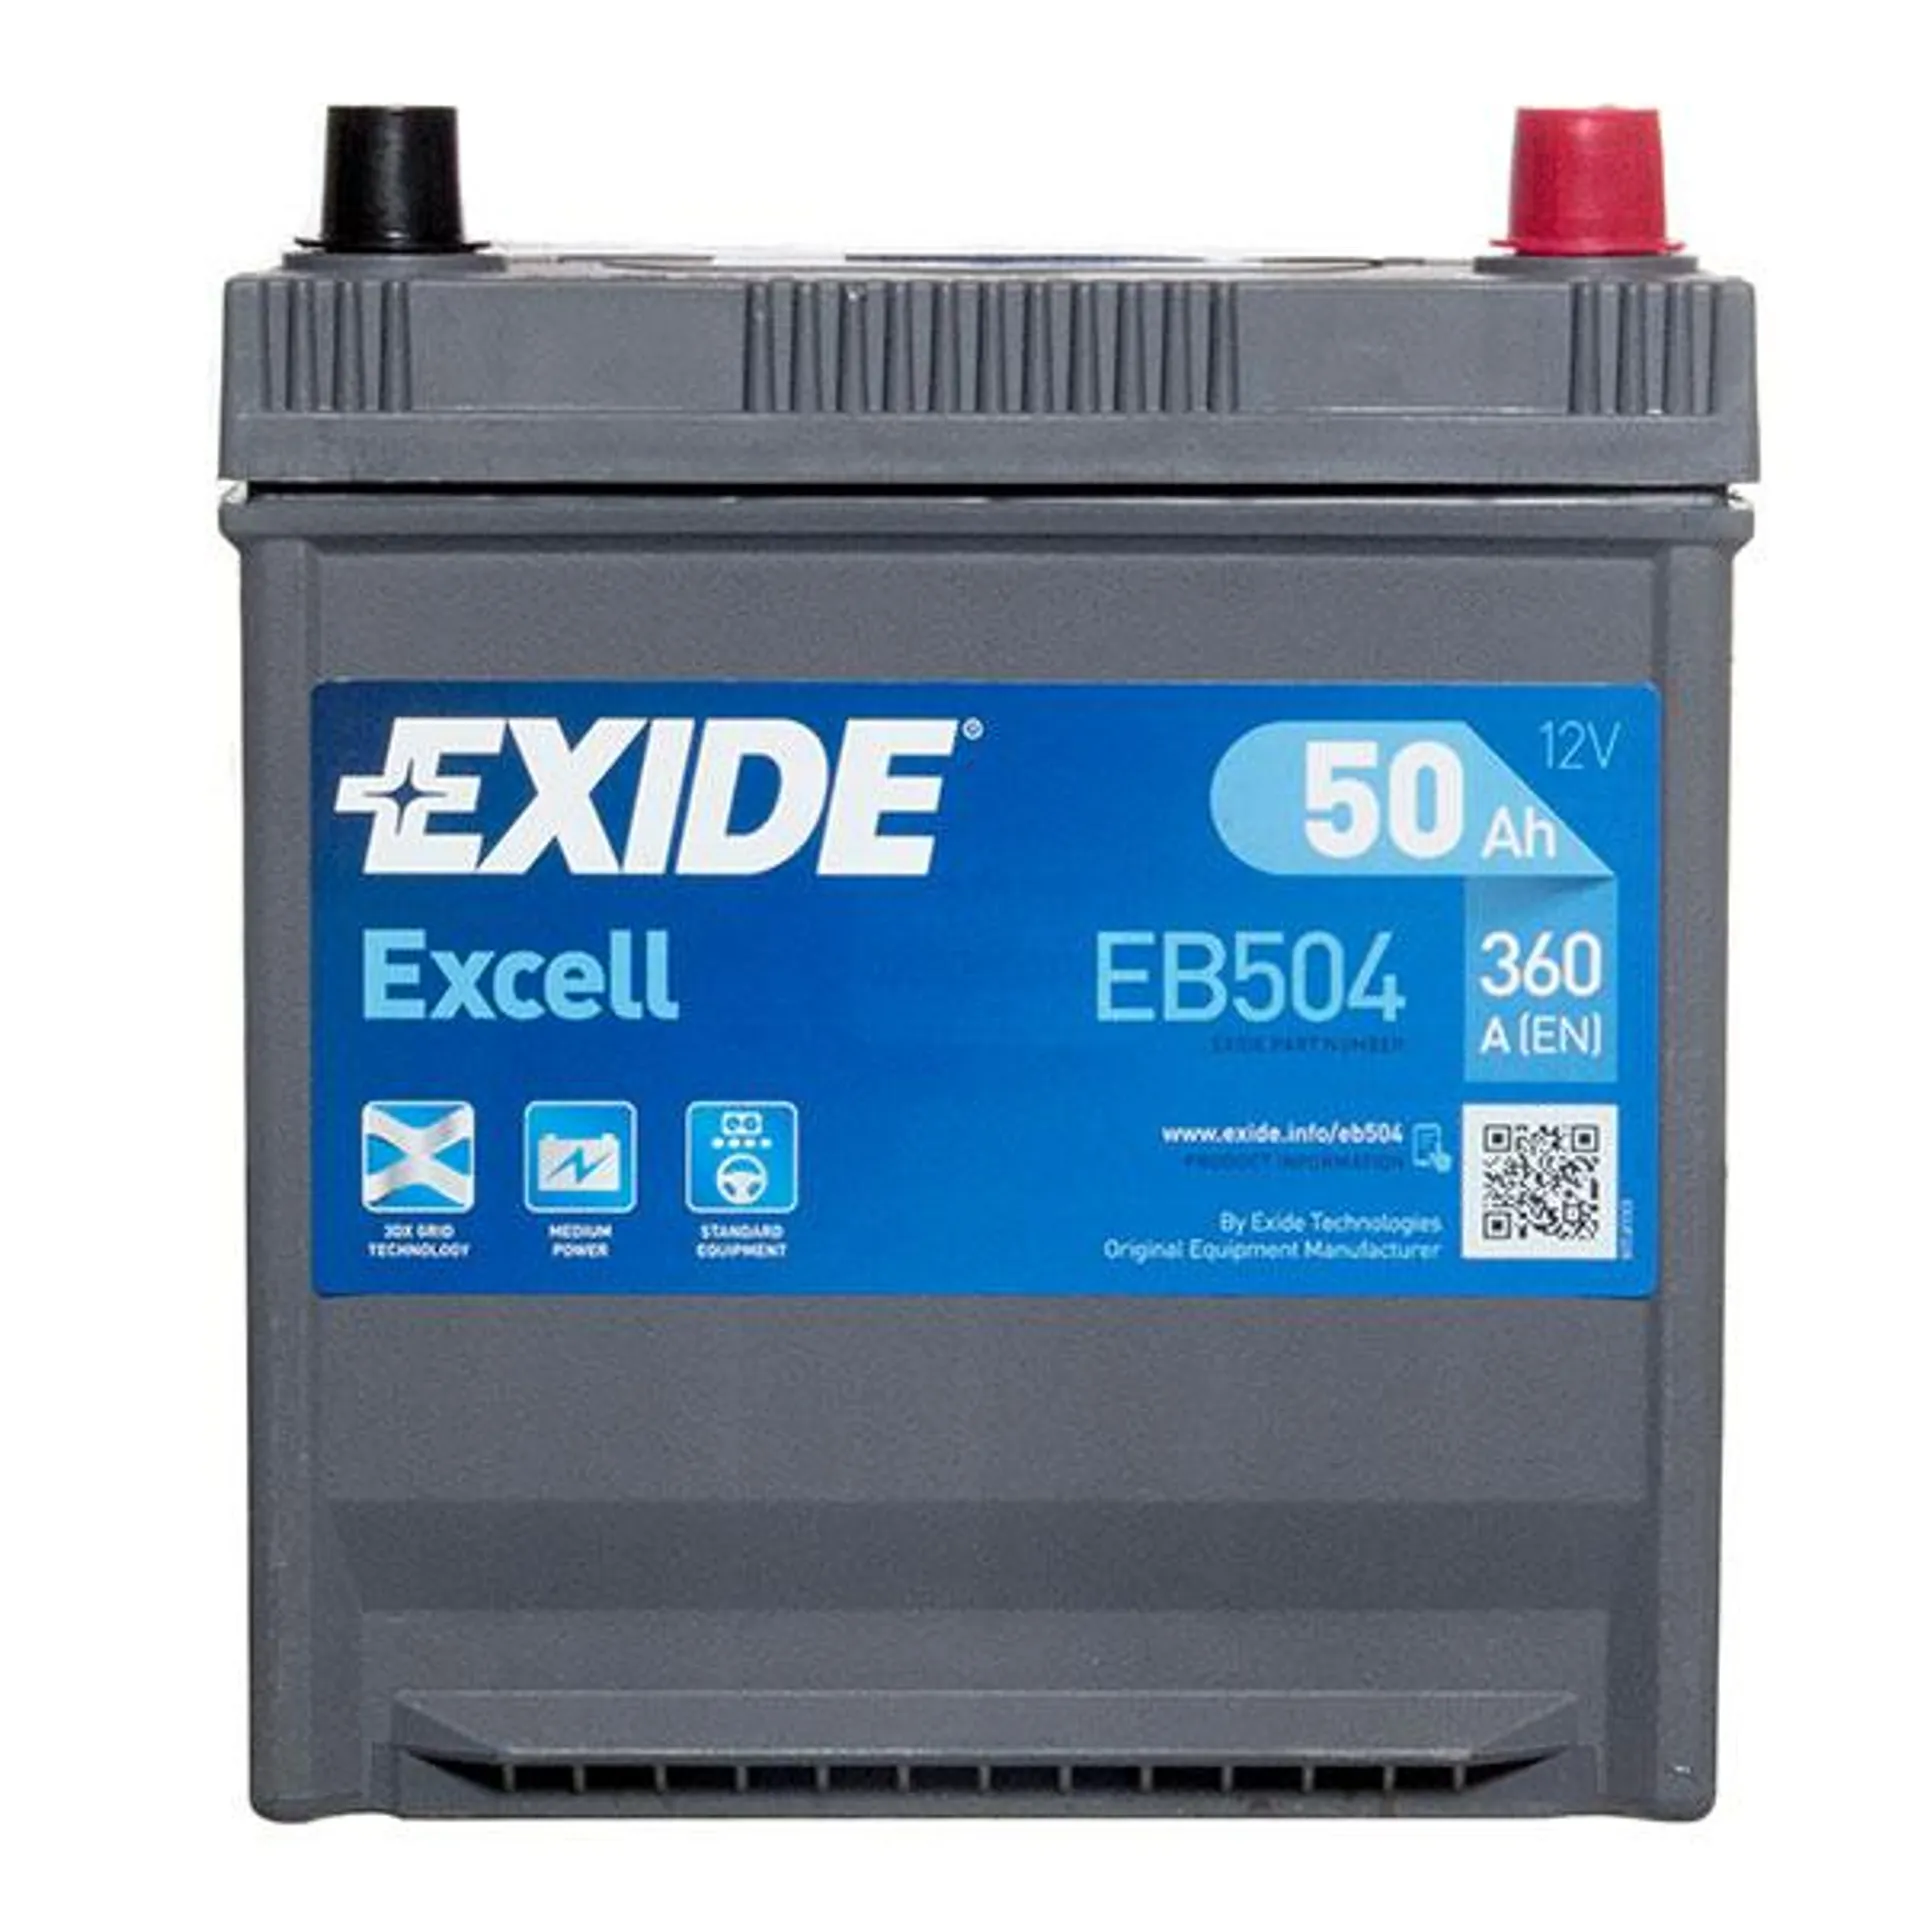 Exide Excel 008 Car Battery - 3 Year Guarantee